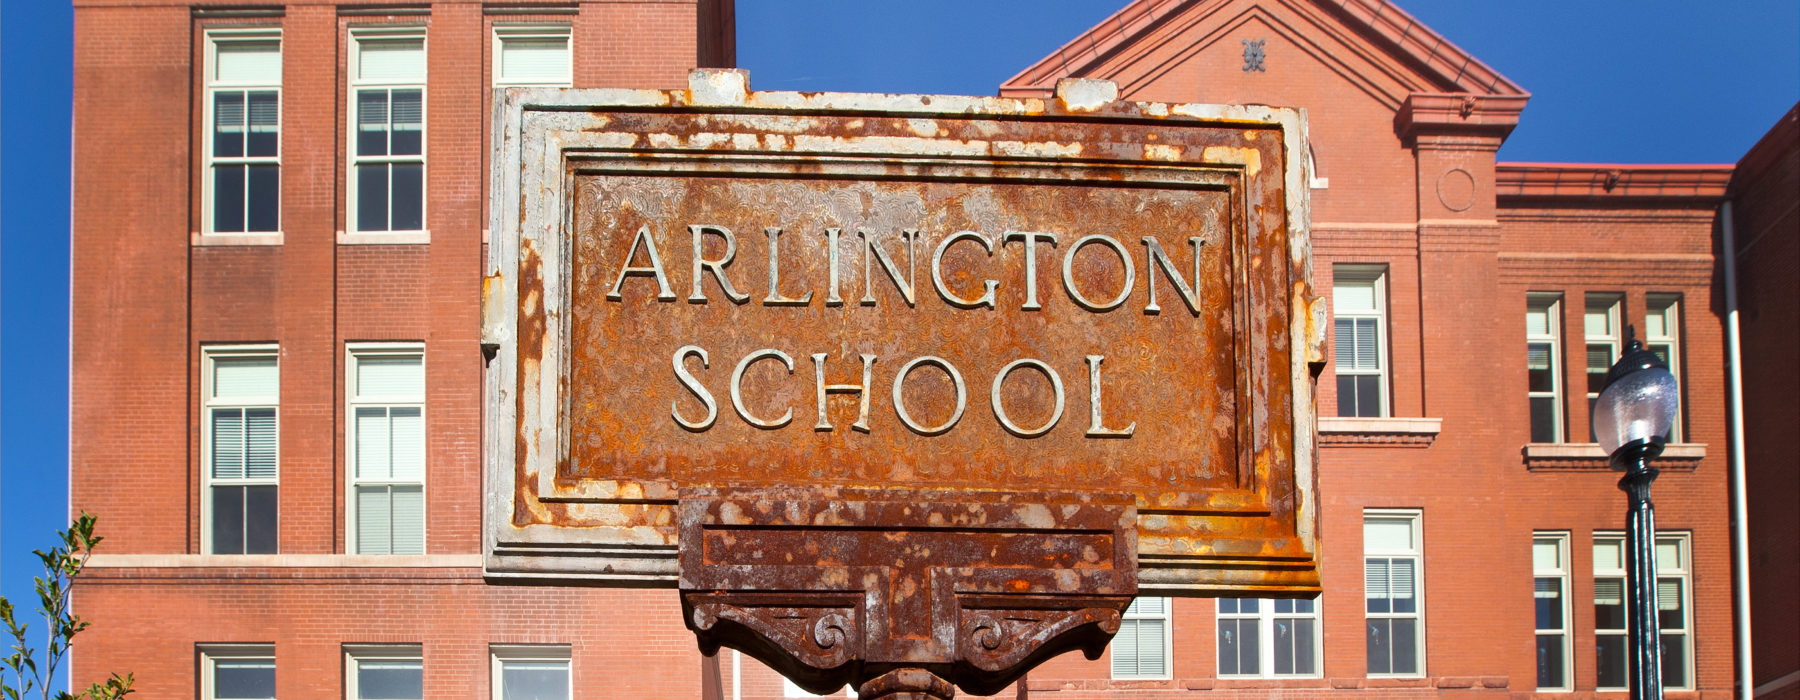 Front of Arlington School